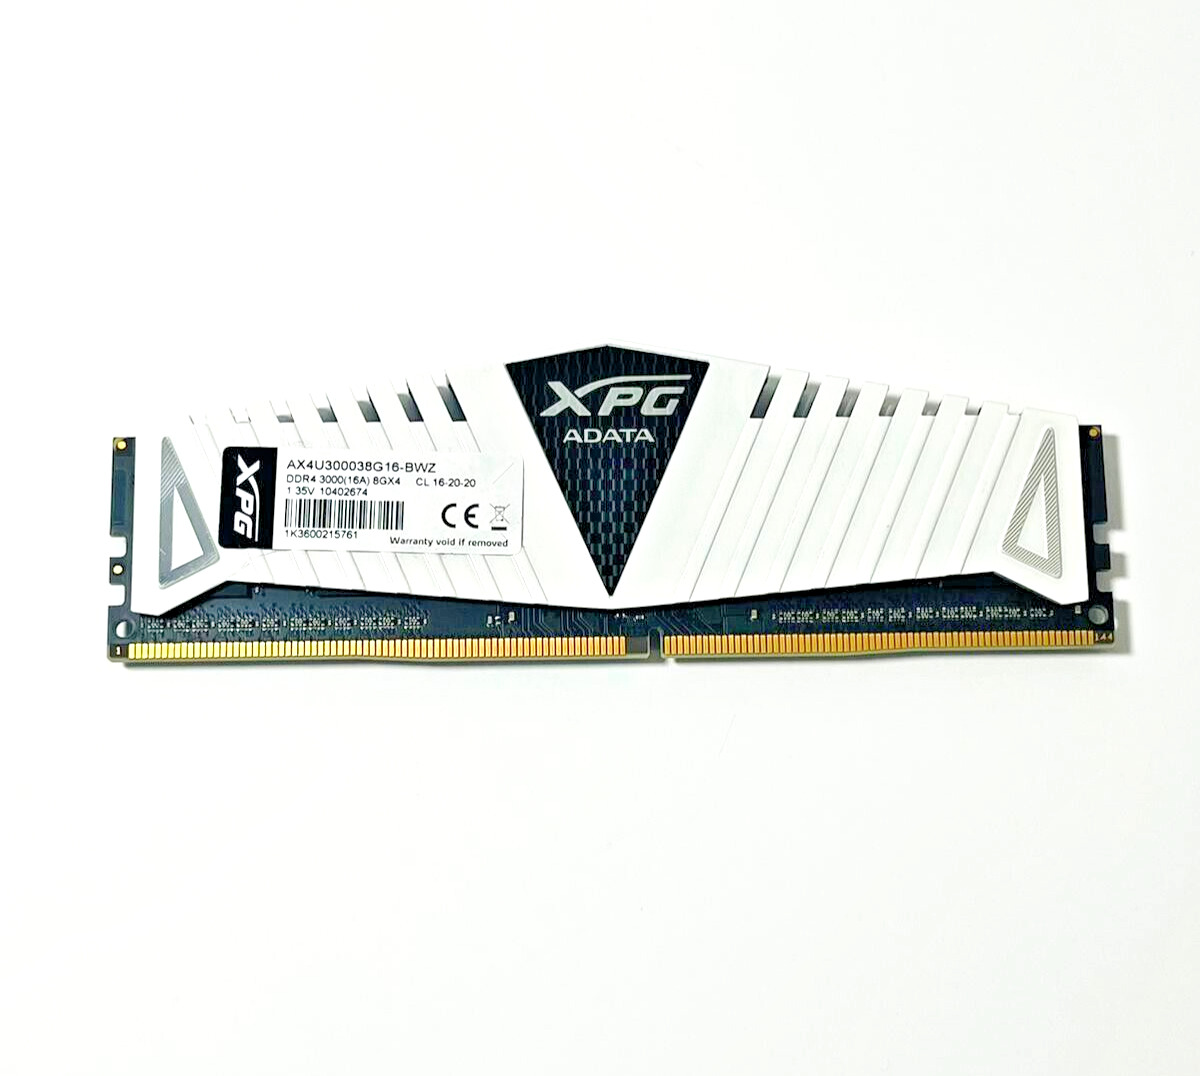 XPG Z1 8GB (1 x 8GB) DDR4 3000 (PC4 24000) Desktop Memory RAMAX4U300038G16-BWZ